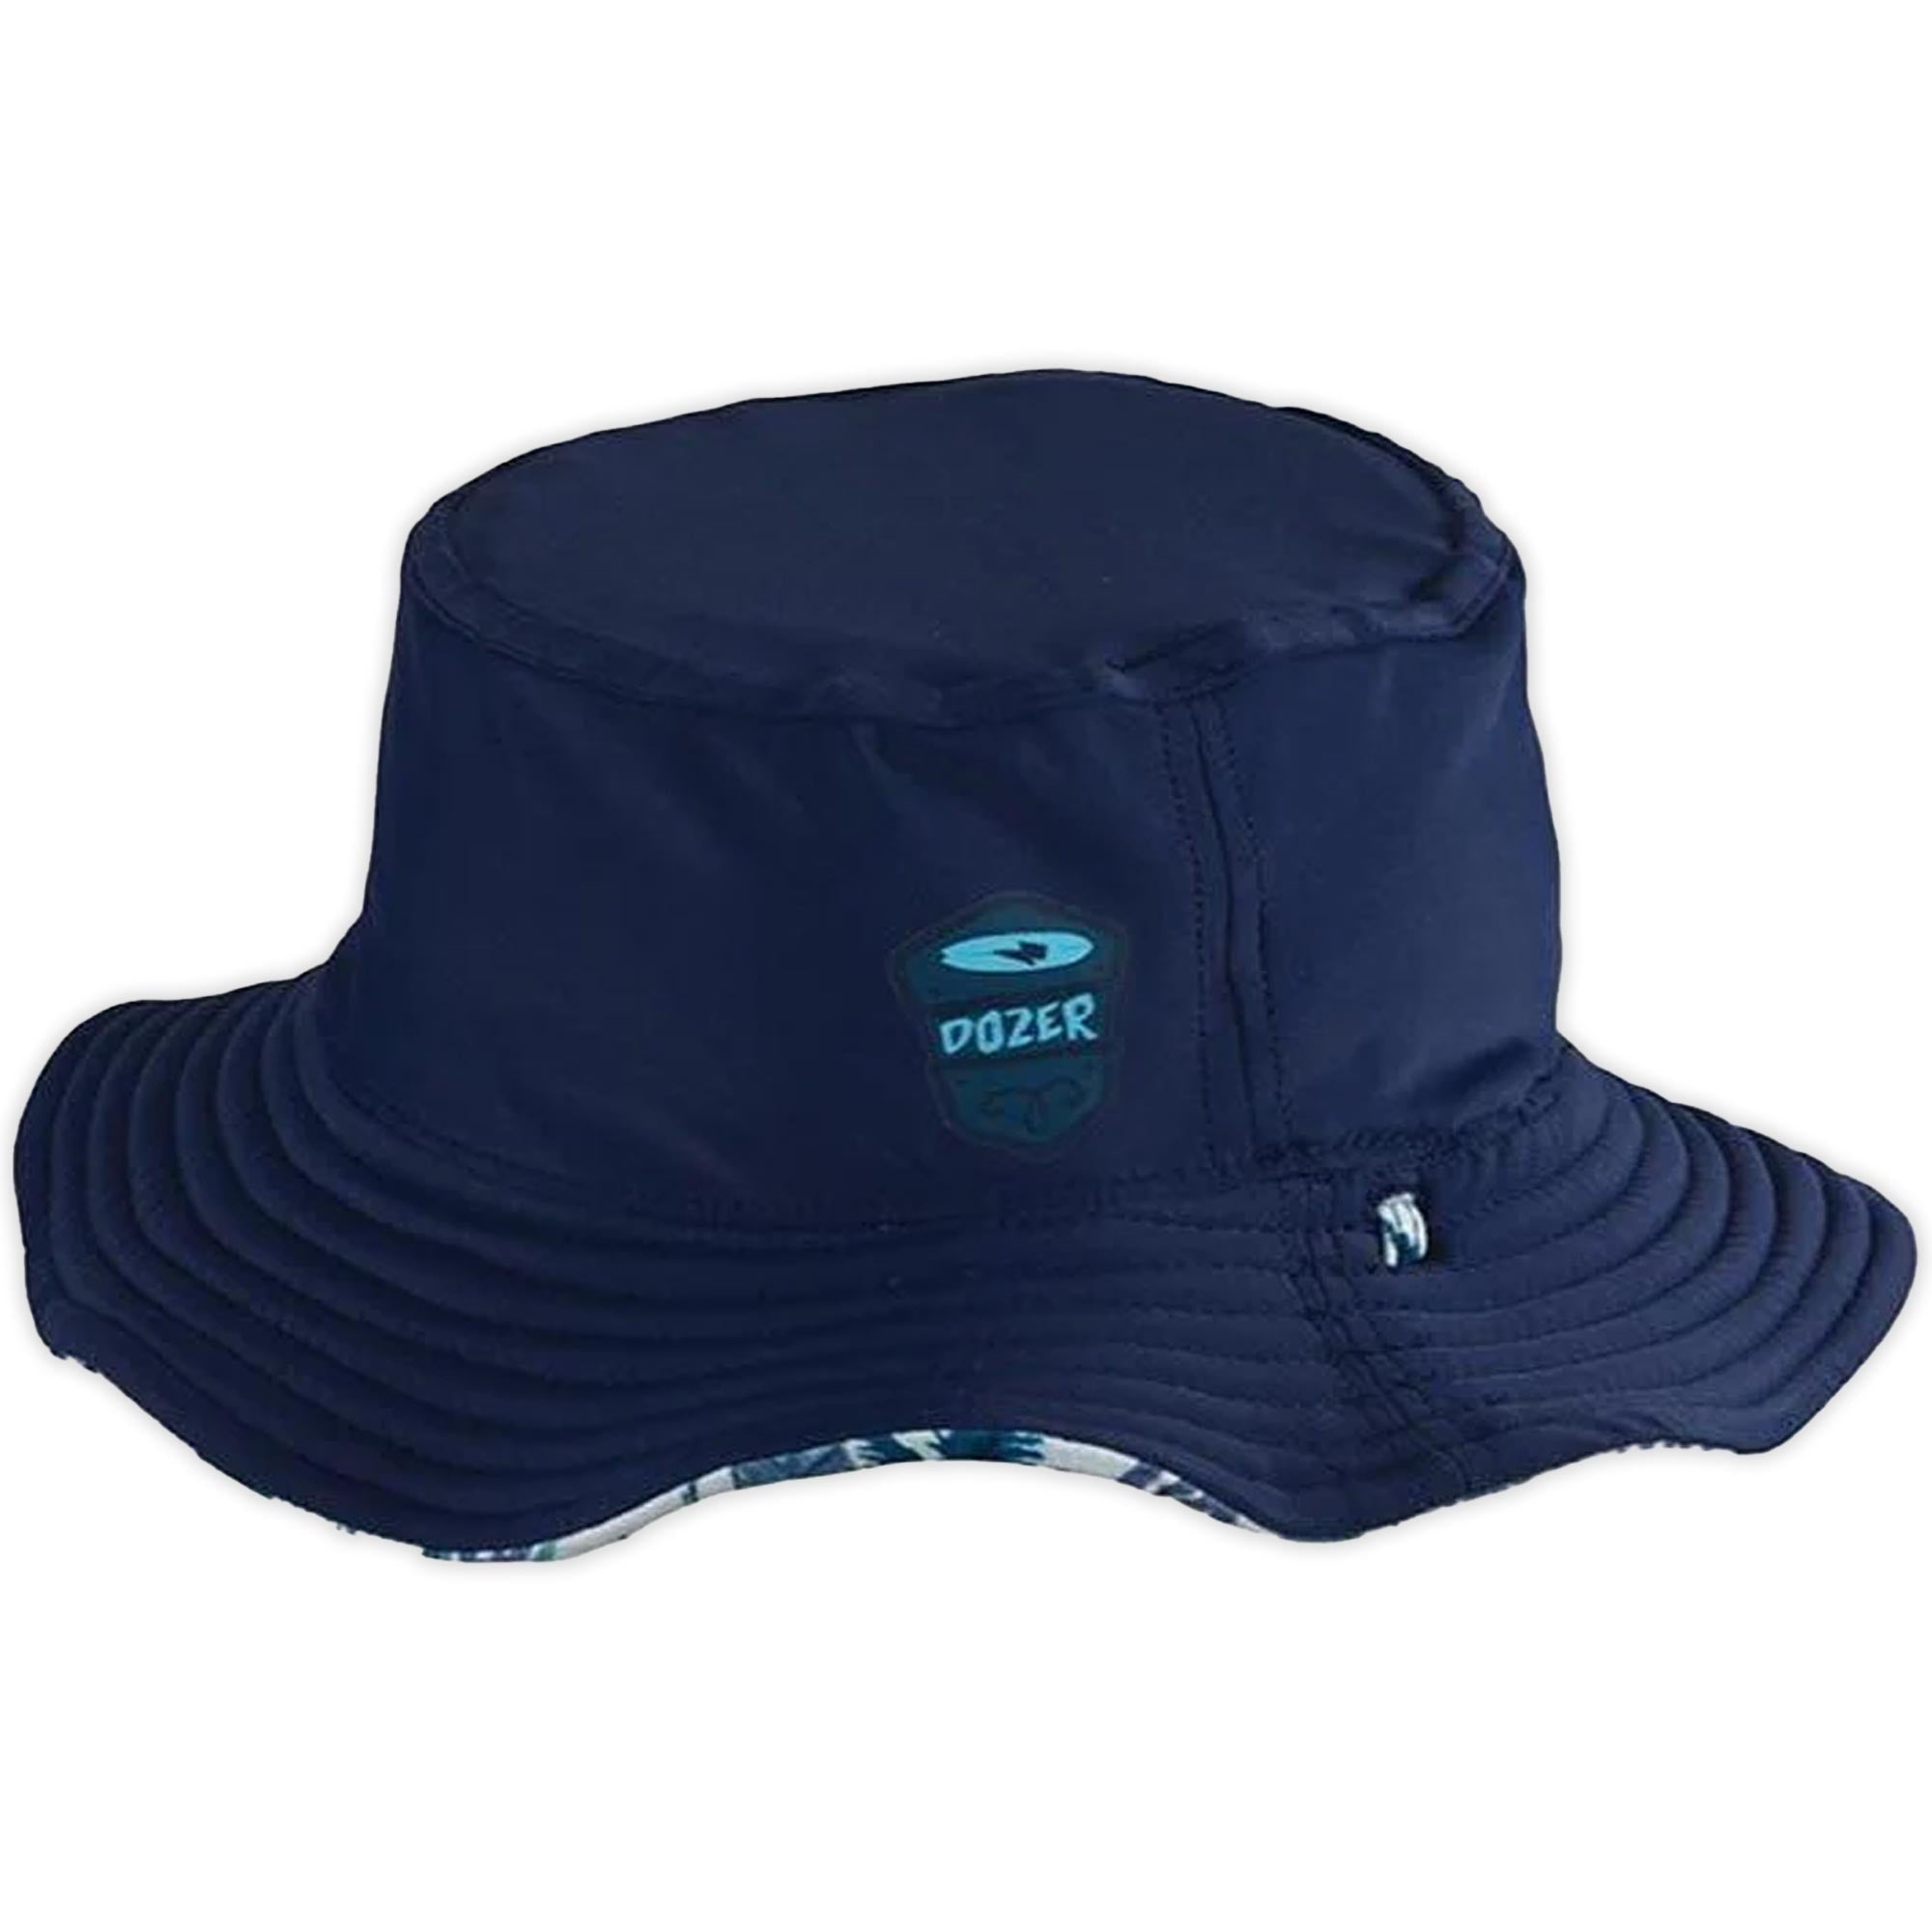 Dozer Boys Bucket Hat - Reef - Blue